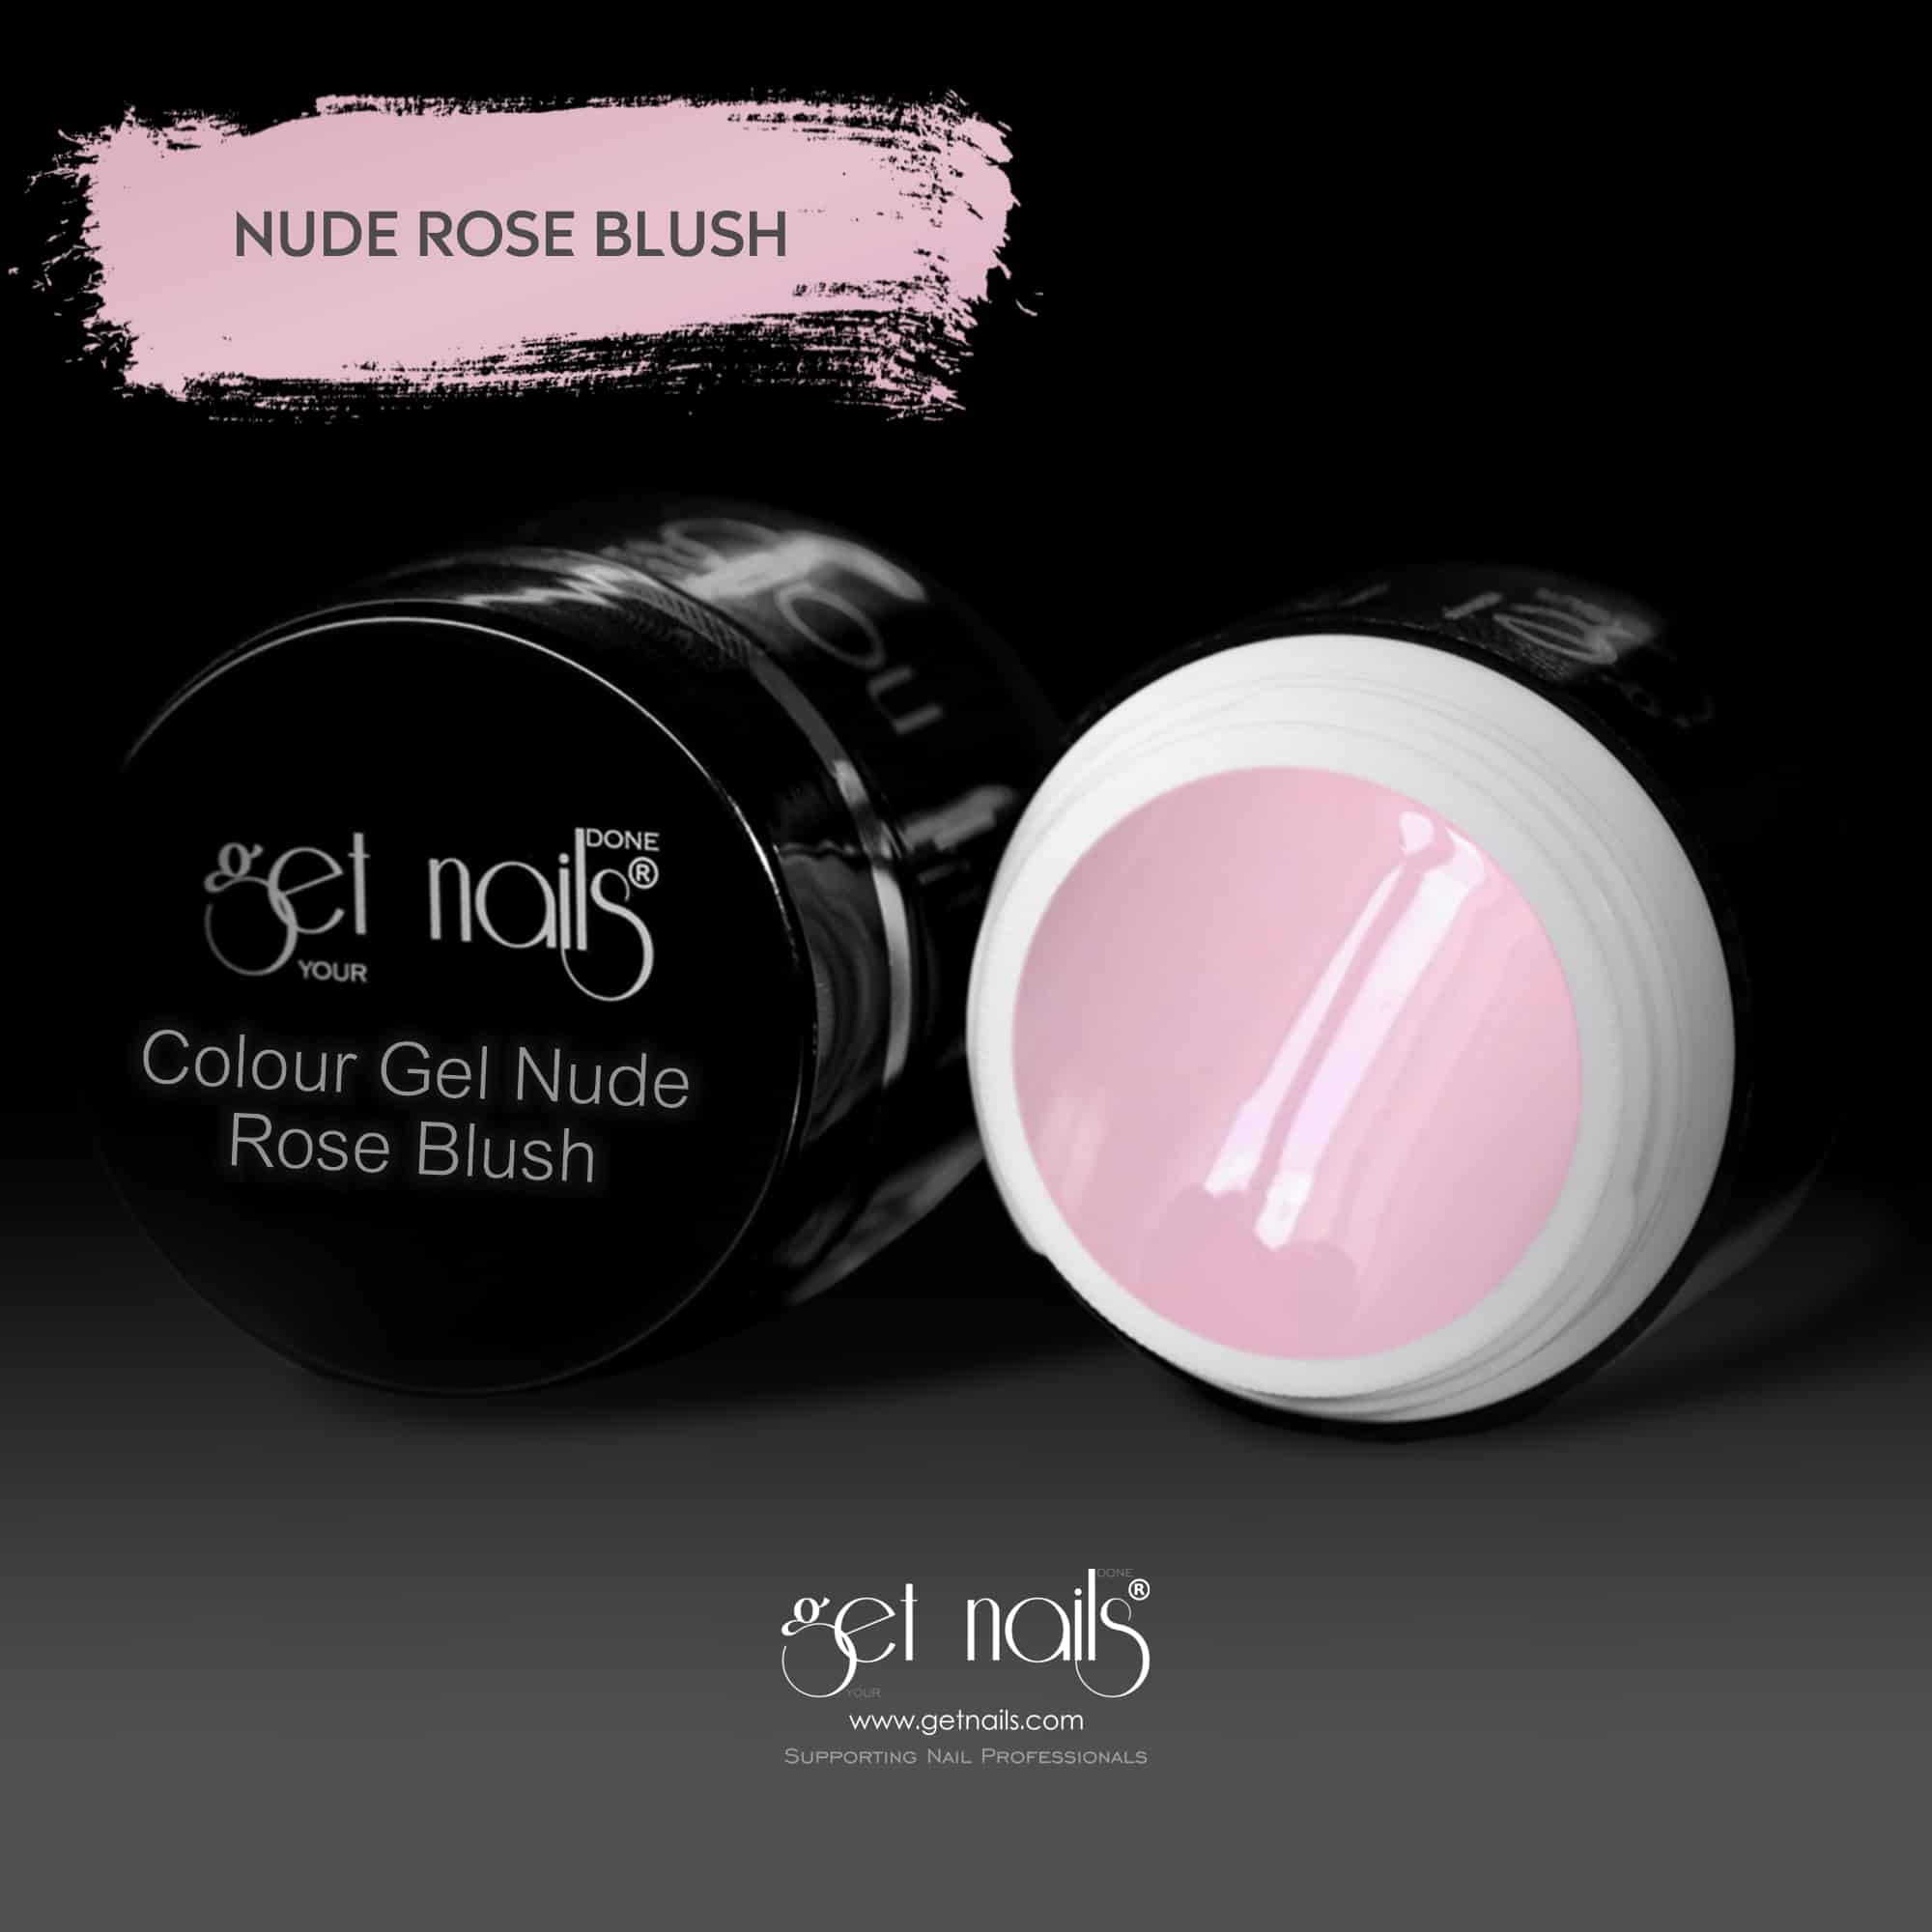 Get Nails Austria - Цветной гель Nude Rose Blush 5g